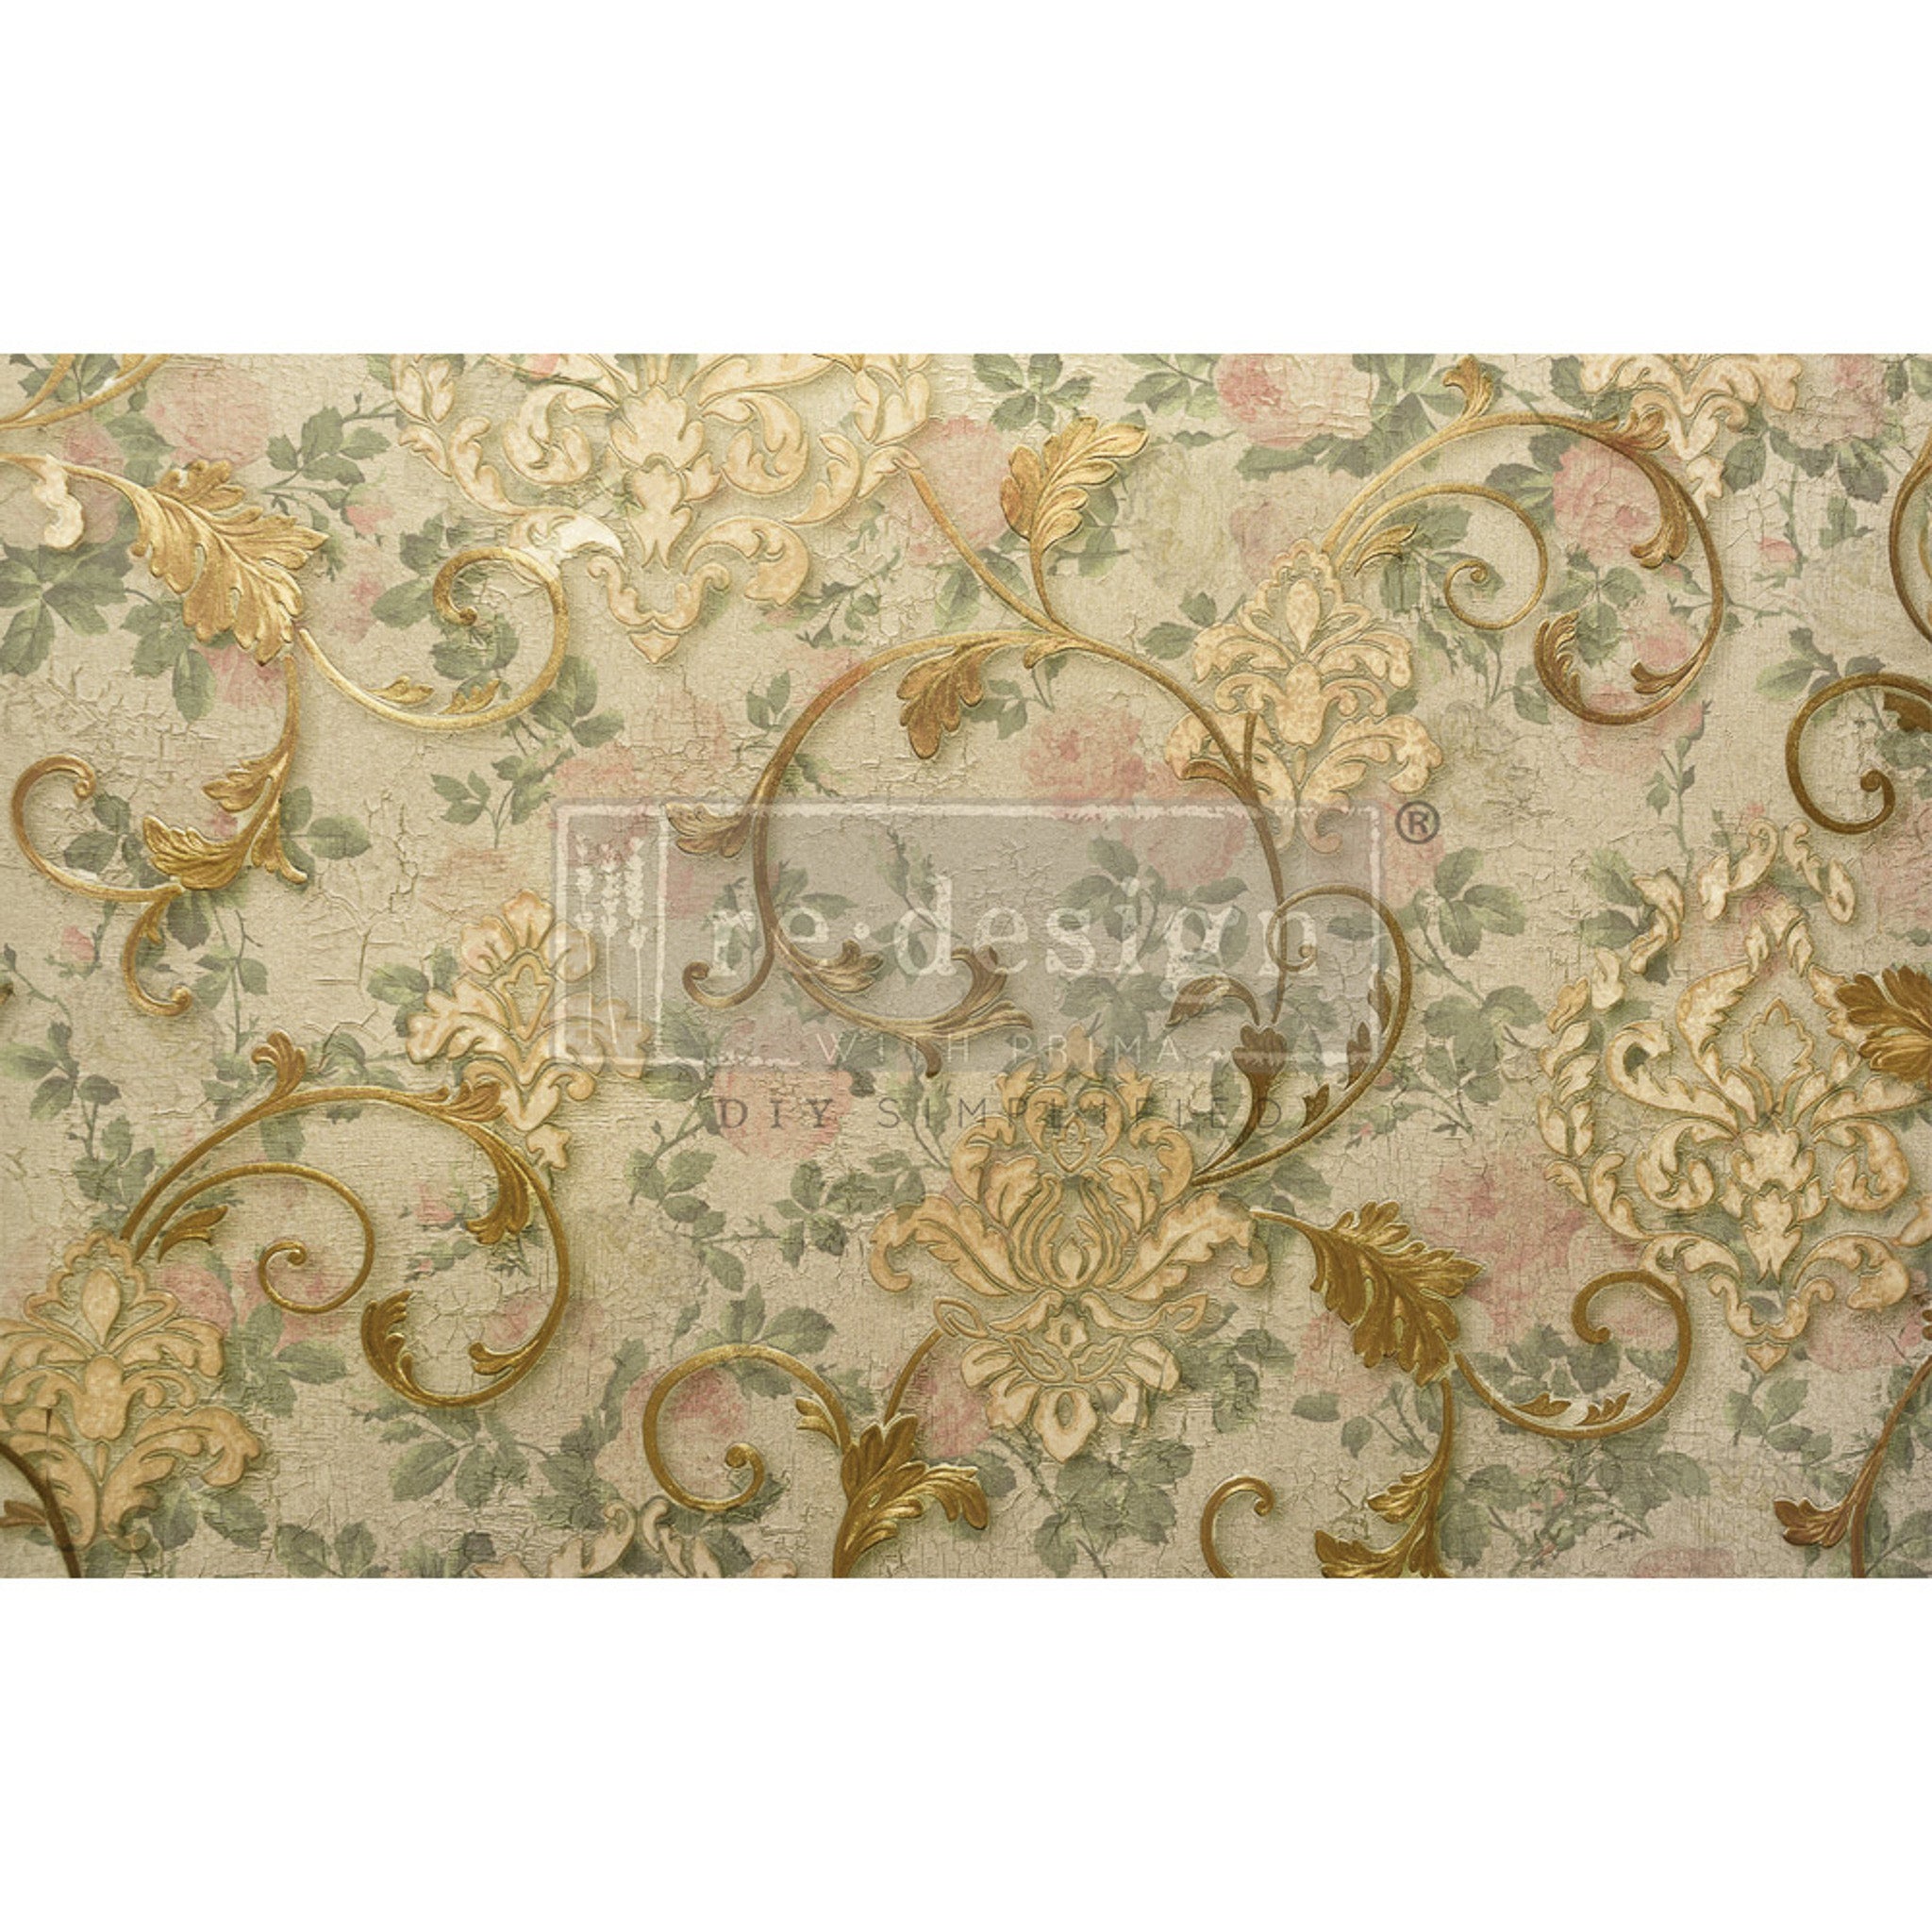 Tissue paper design of gold brocade against a crackled light pink floral and beige background.